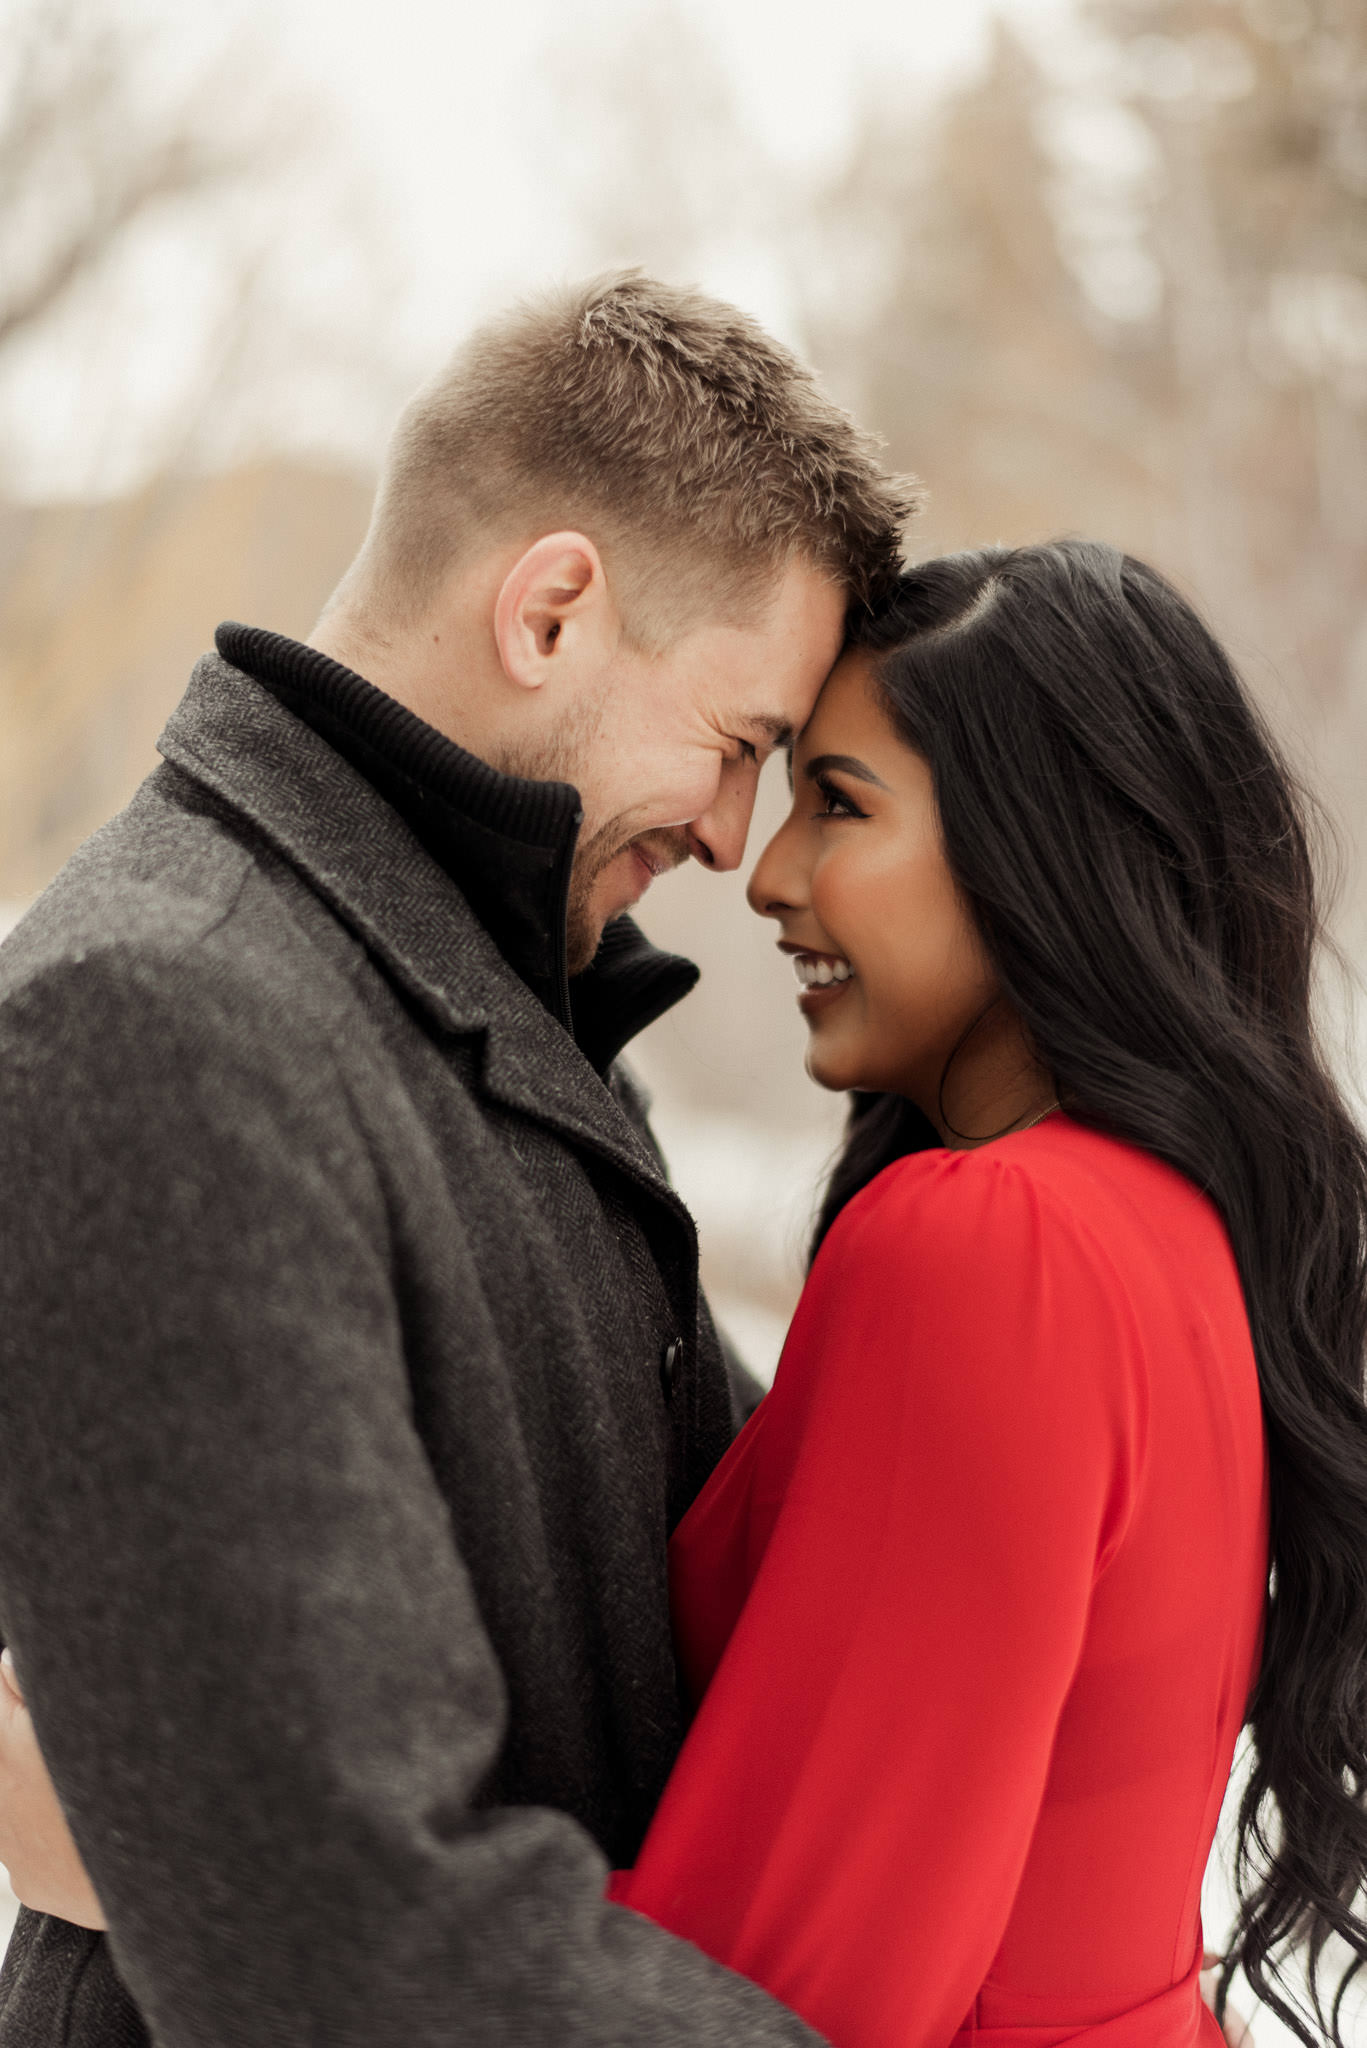 sandra-ryan-colorado-winter-snow-engagement-couples-valentines-red-houston-photographer-sm-6.jpg